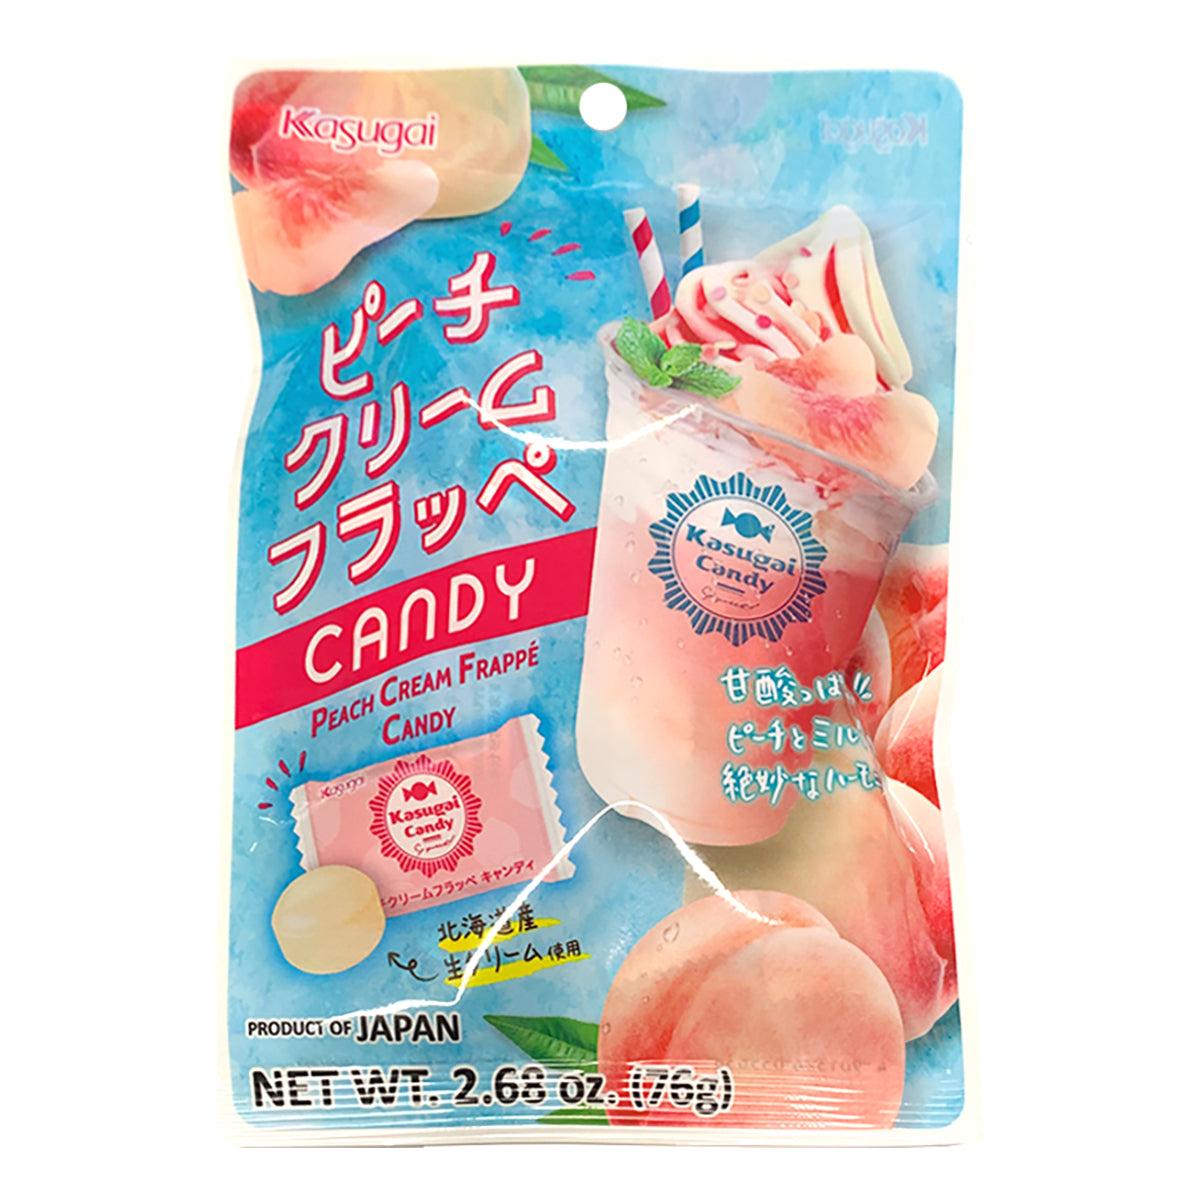 kasugai peach cream frappe candy - 76g